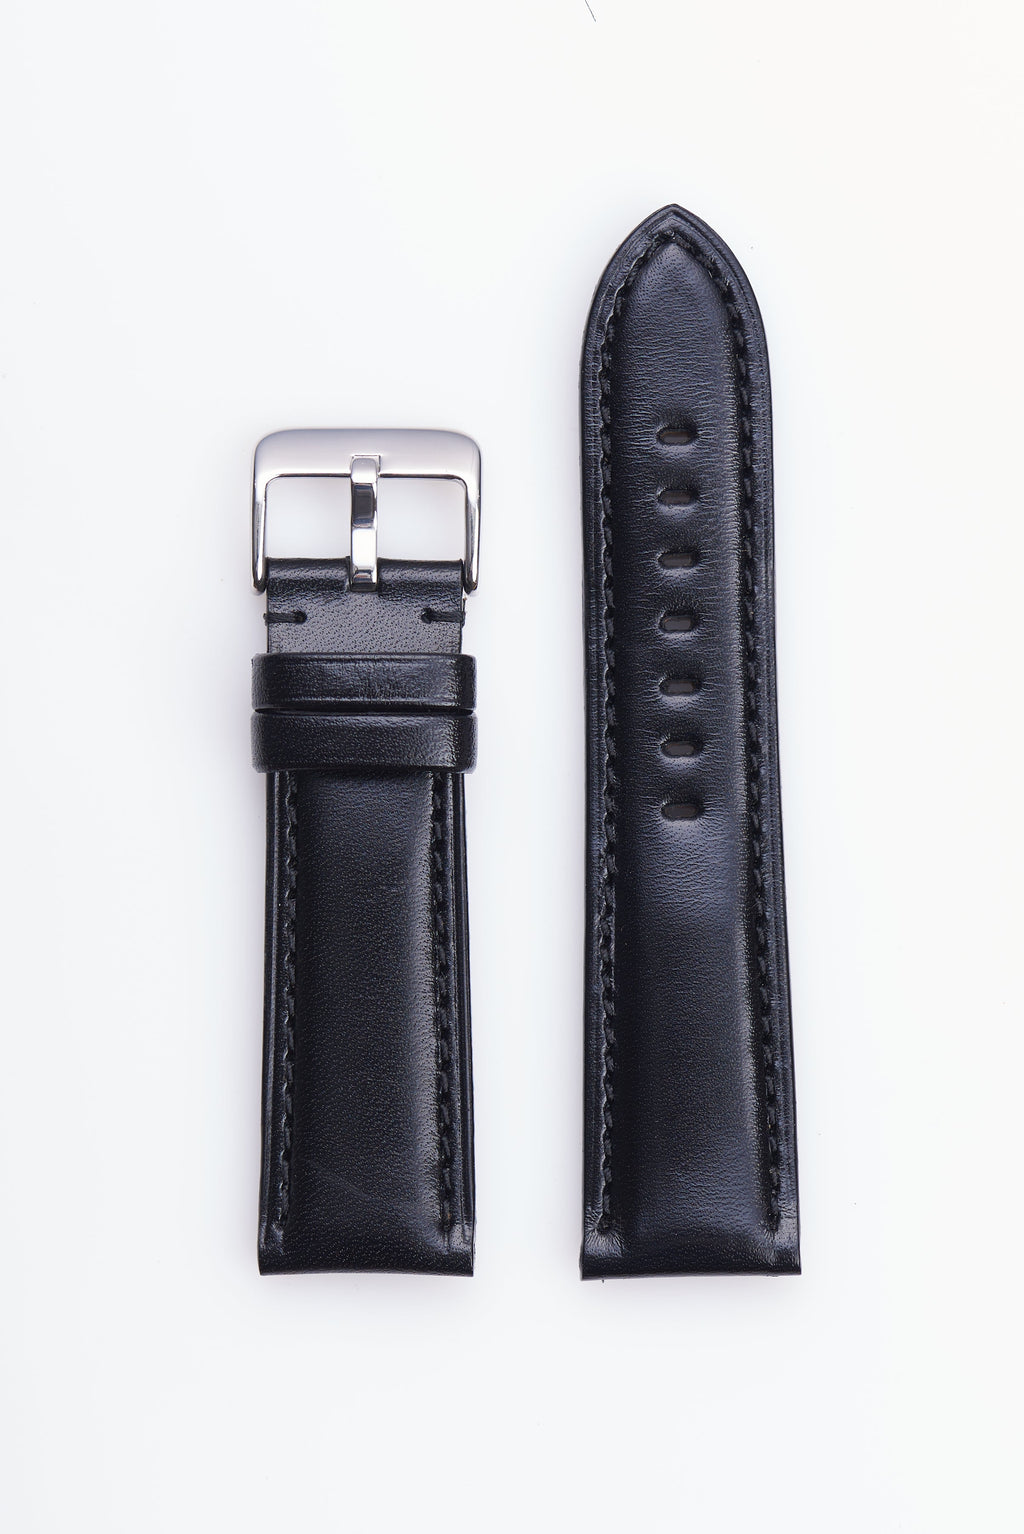 Black High Polished Italian Leather | USA Made - Traditional - H2046